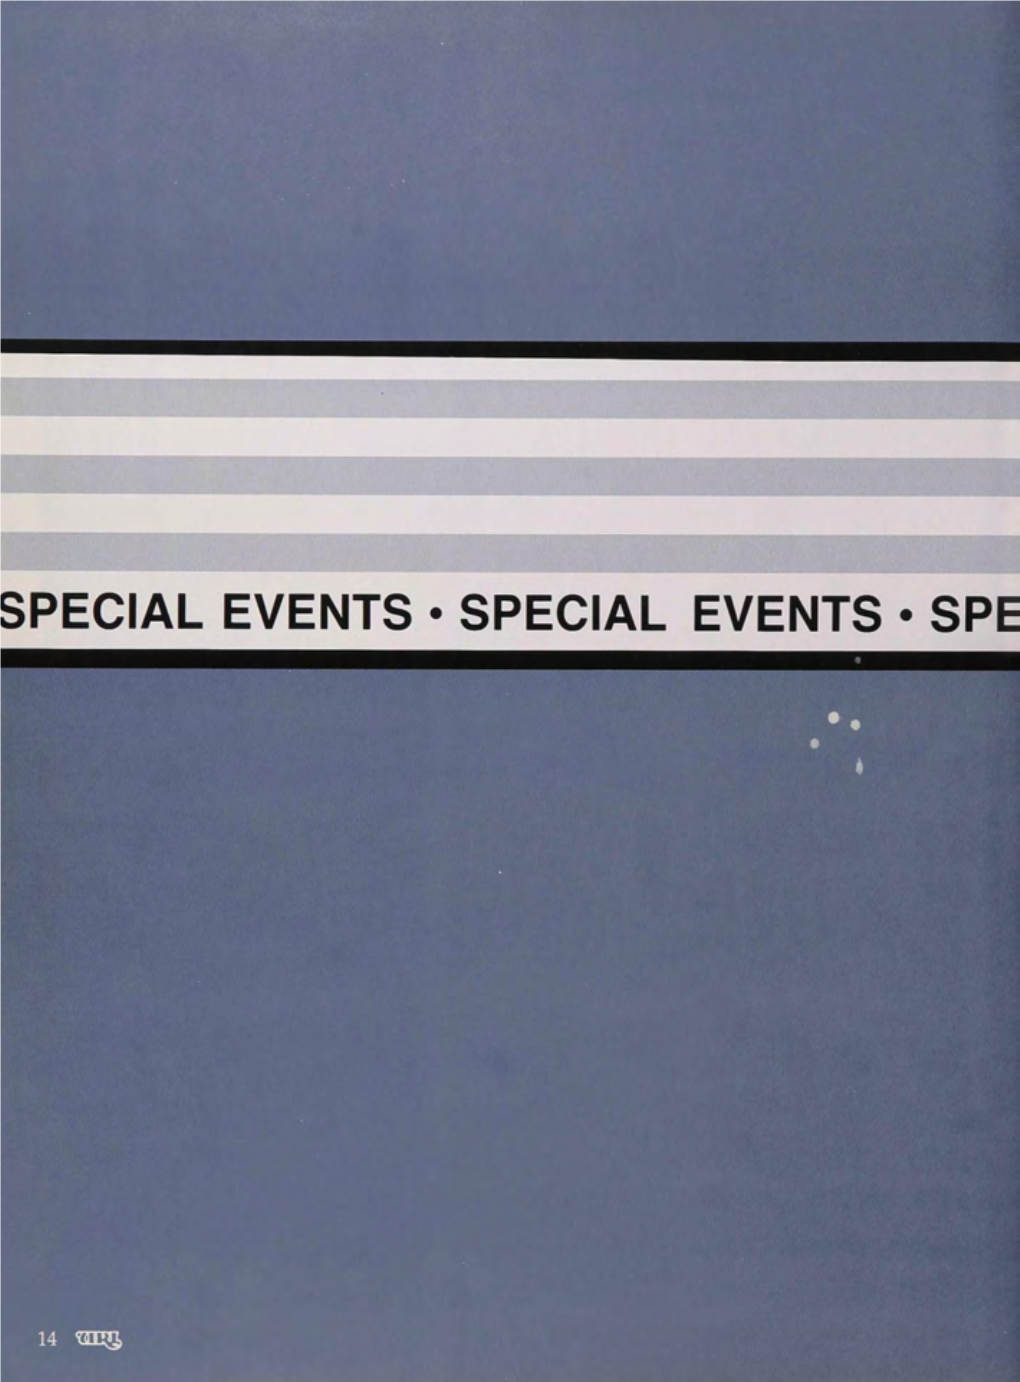 SPECIAL EVENTS SPECIAL EVENTS SPE SPECIAL EVENTS 15 URI Welcomes The